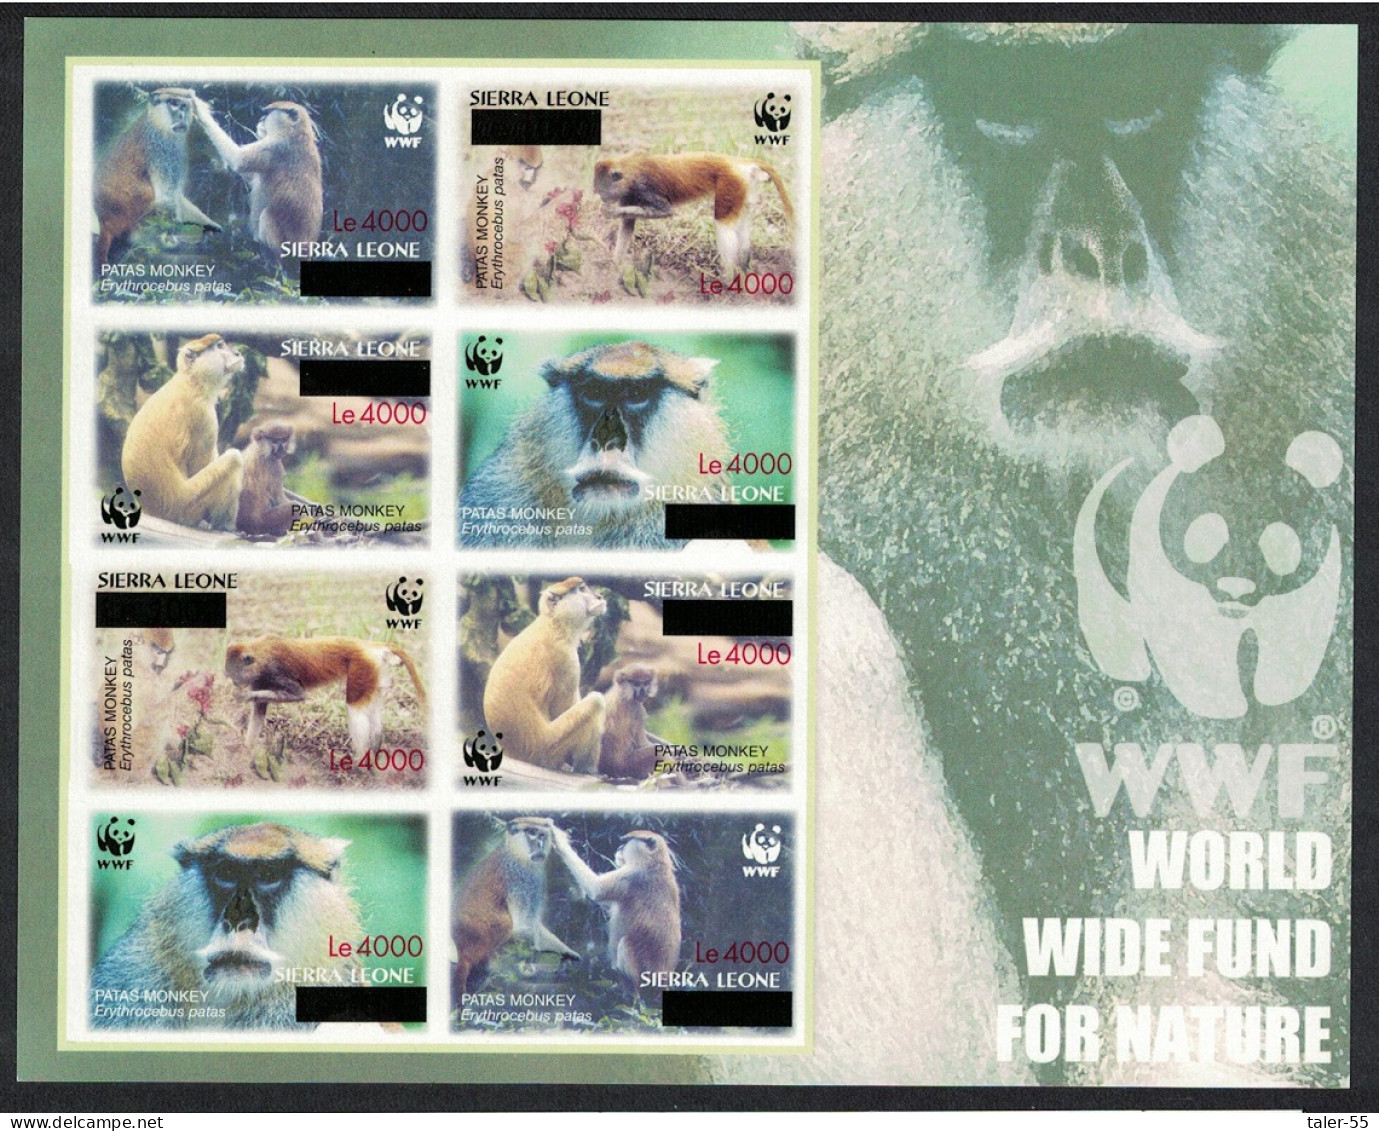 Sierra Leone WWF Patas Monkey Imperf Sheetlet Of 2 Sets OVERPRINT RARR 2004 MNH SG#4589-4592 - Sierra Leone (1961-...)